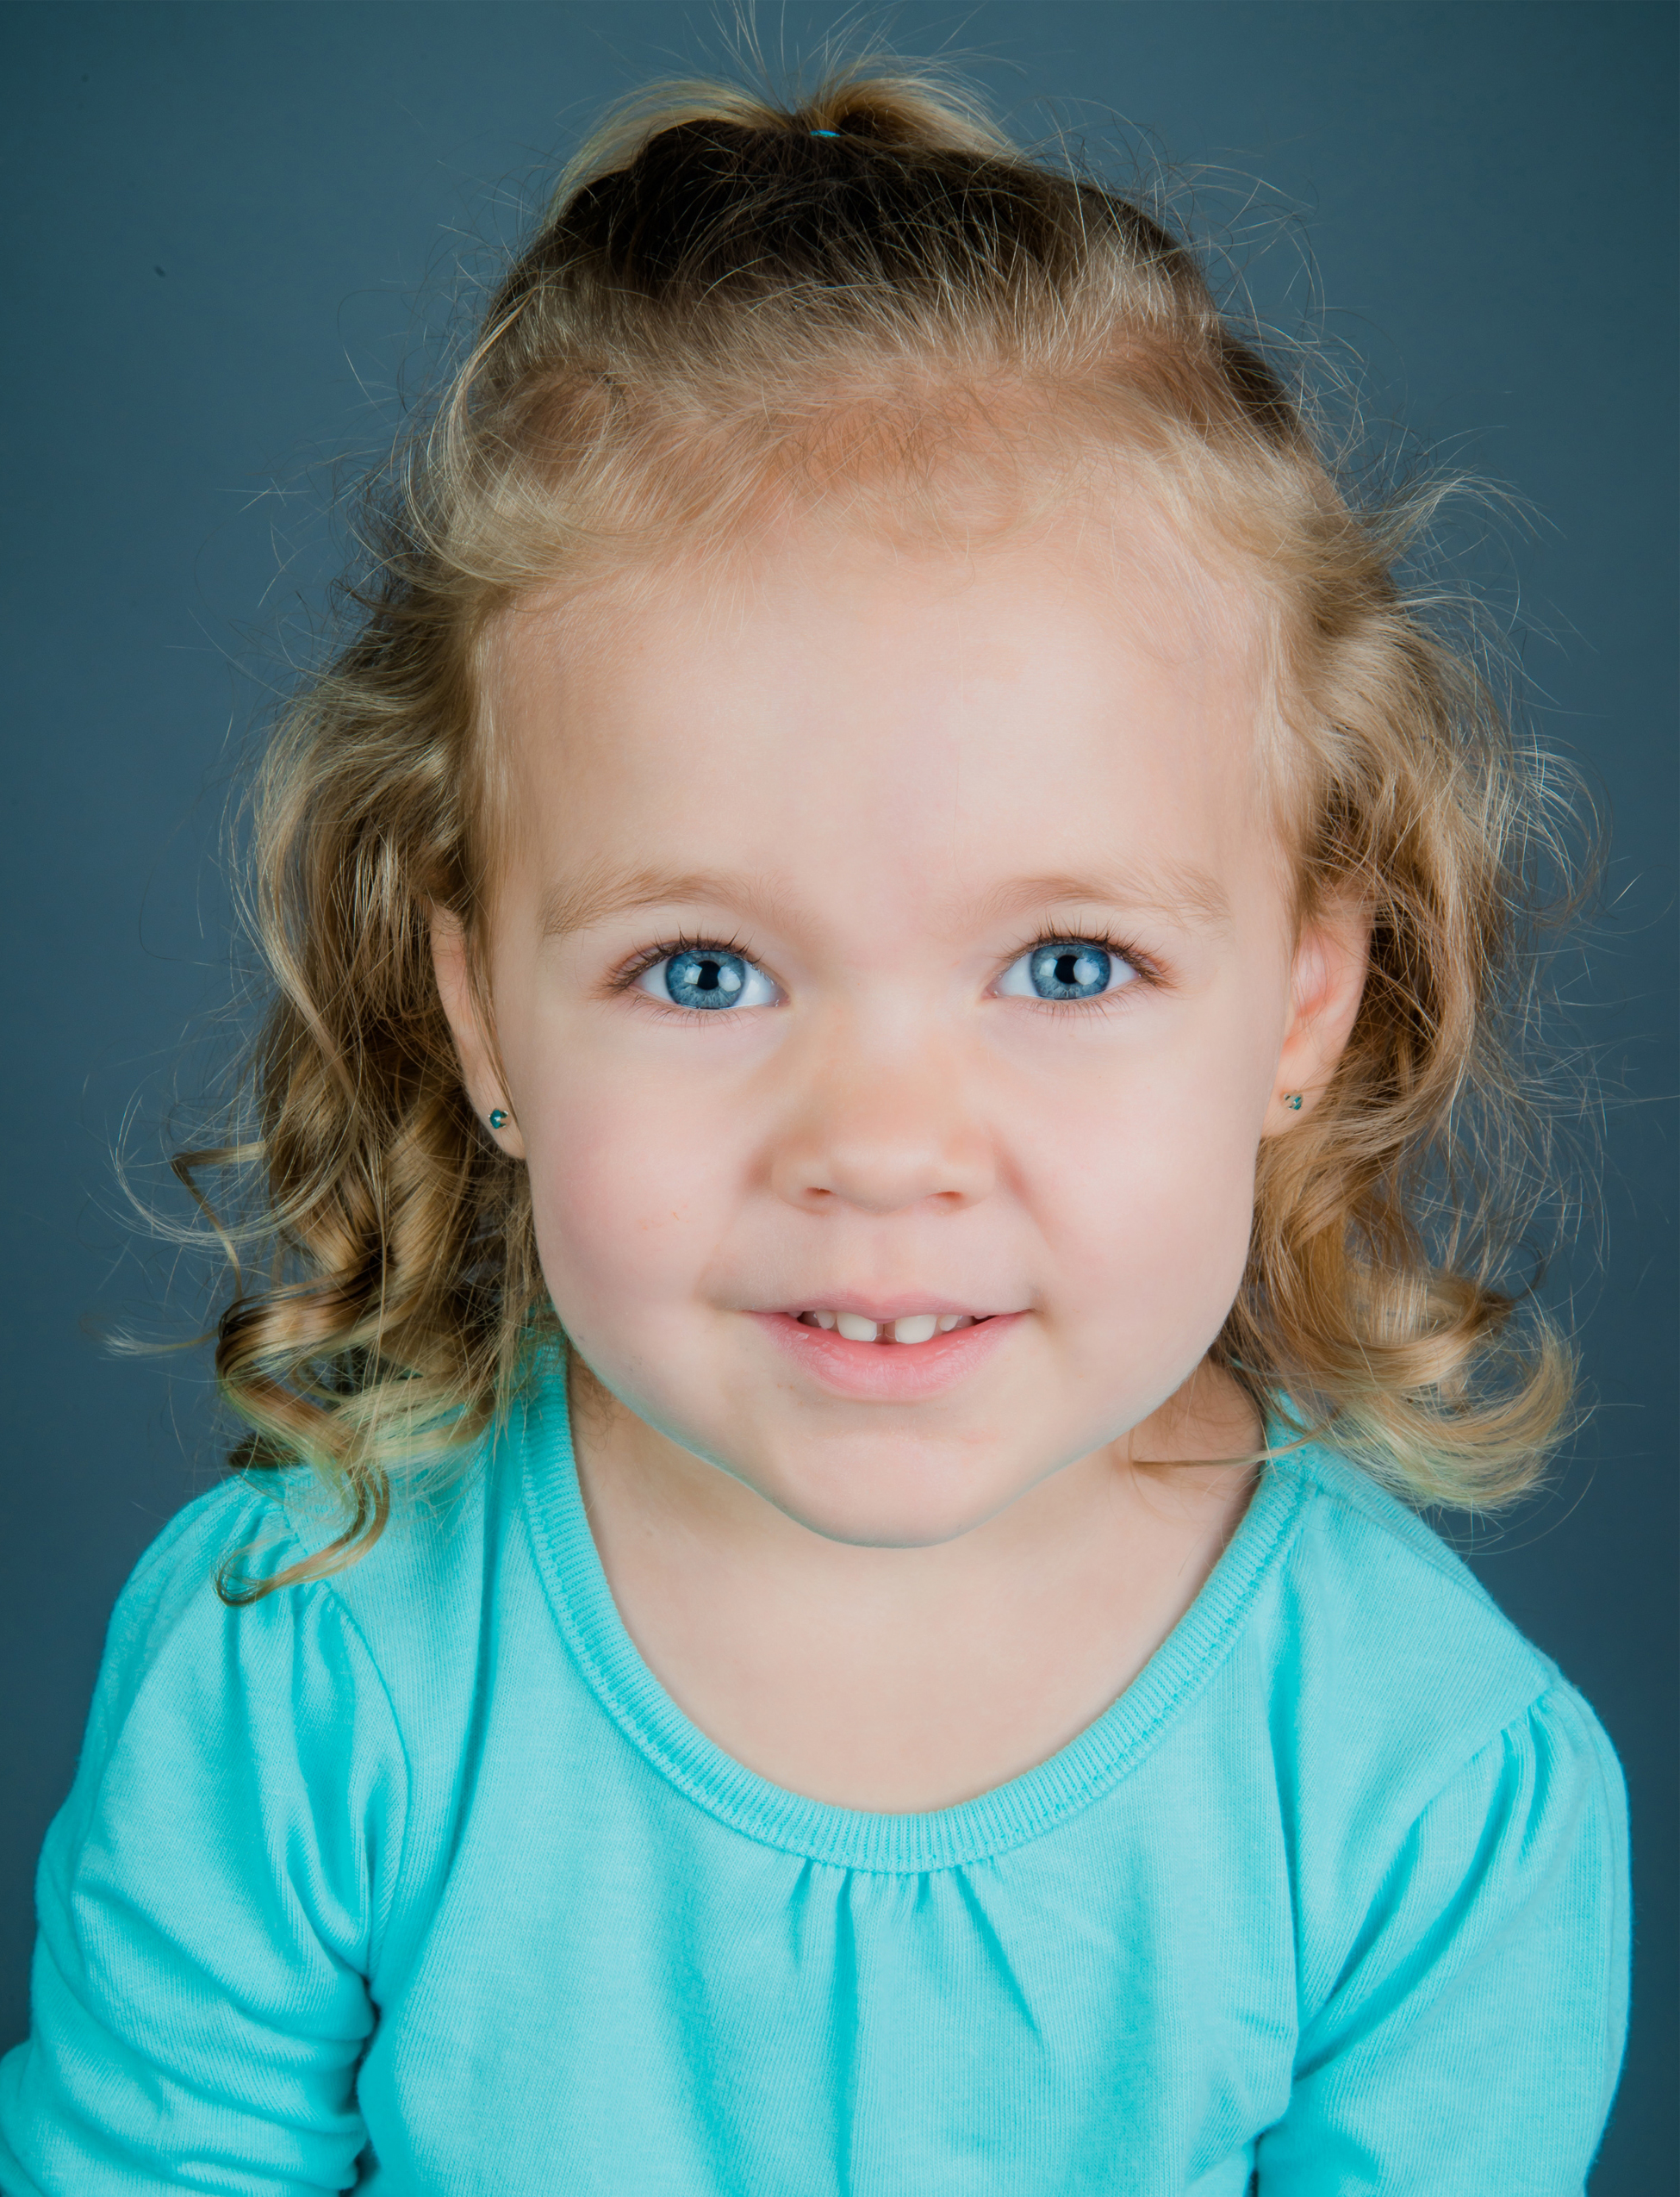 Rhiannon Spengler Age 3